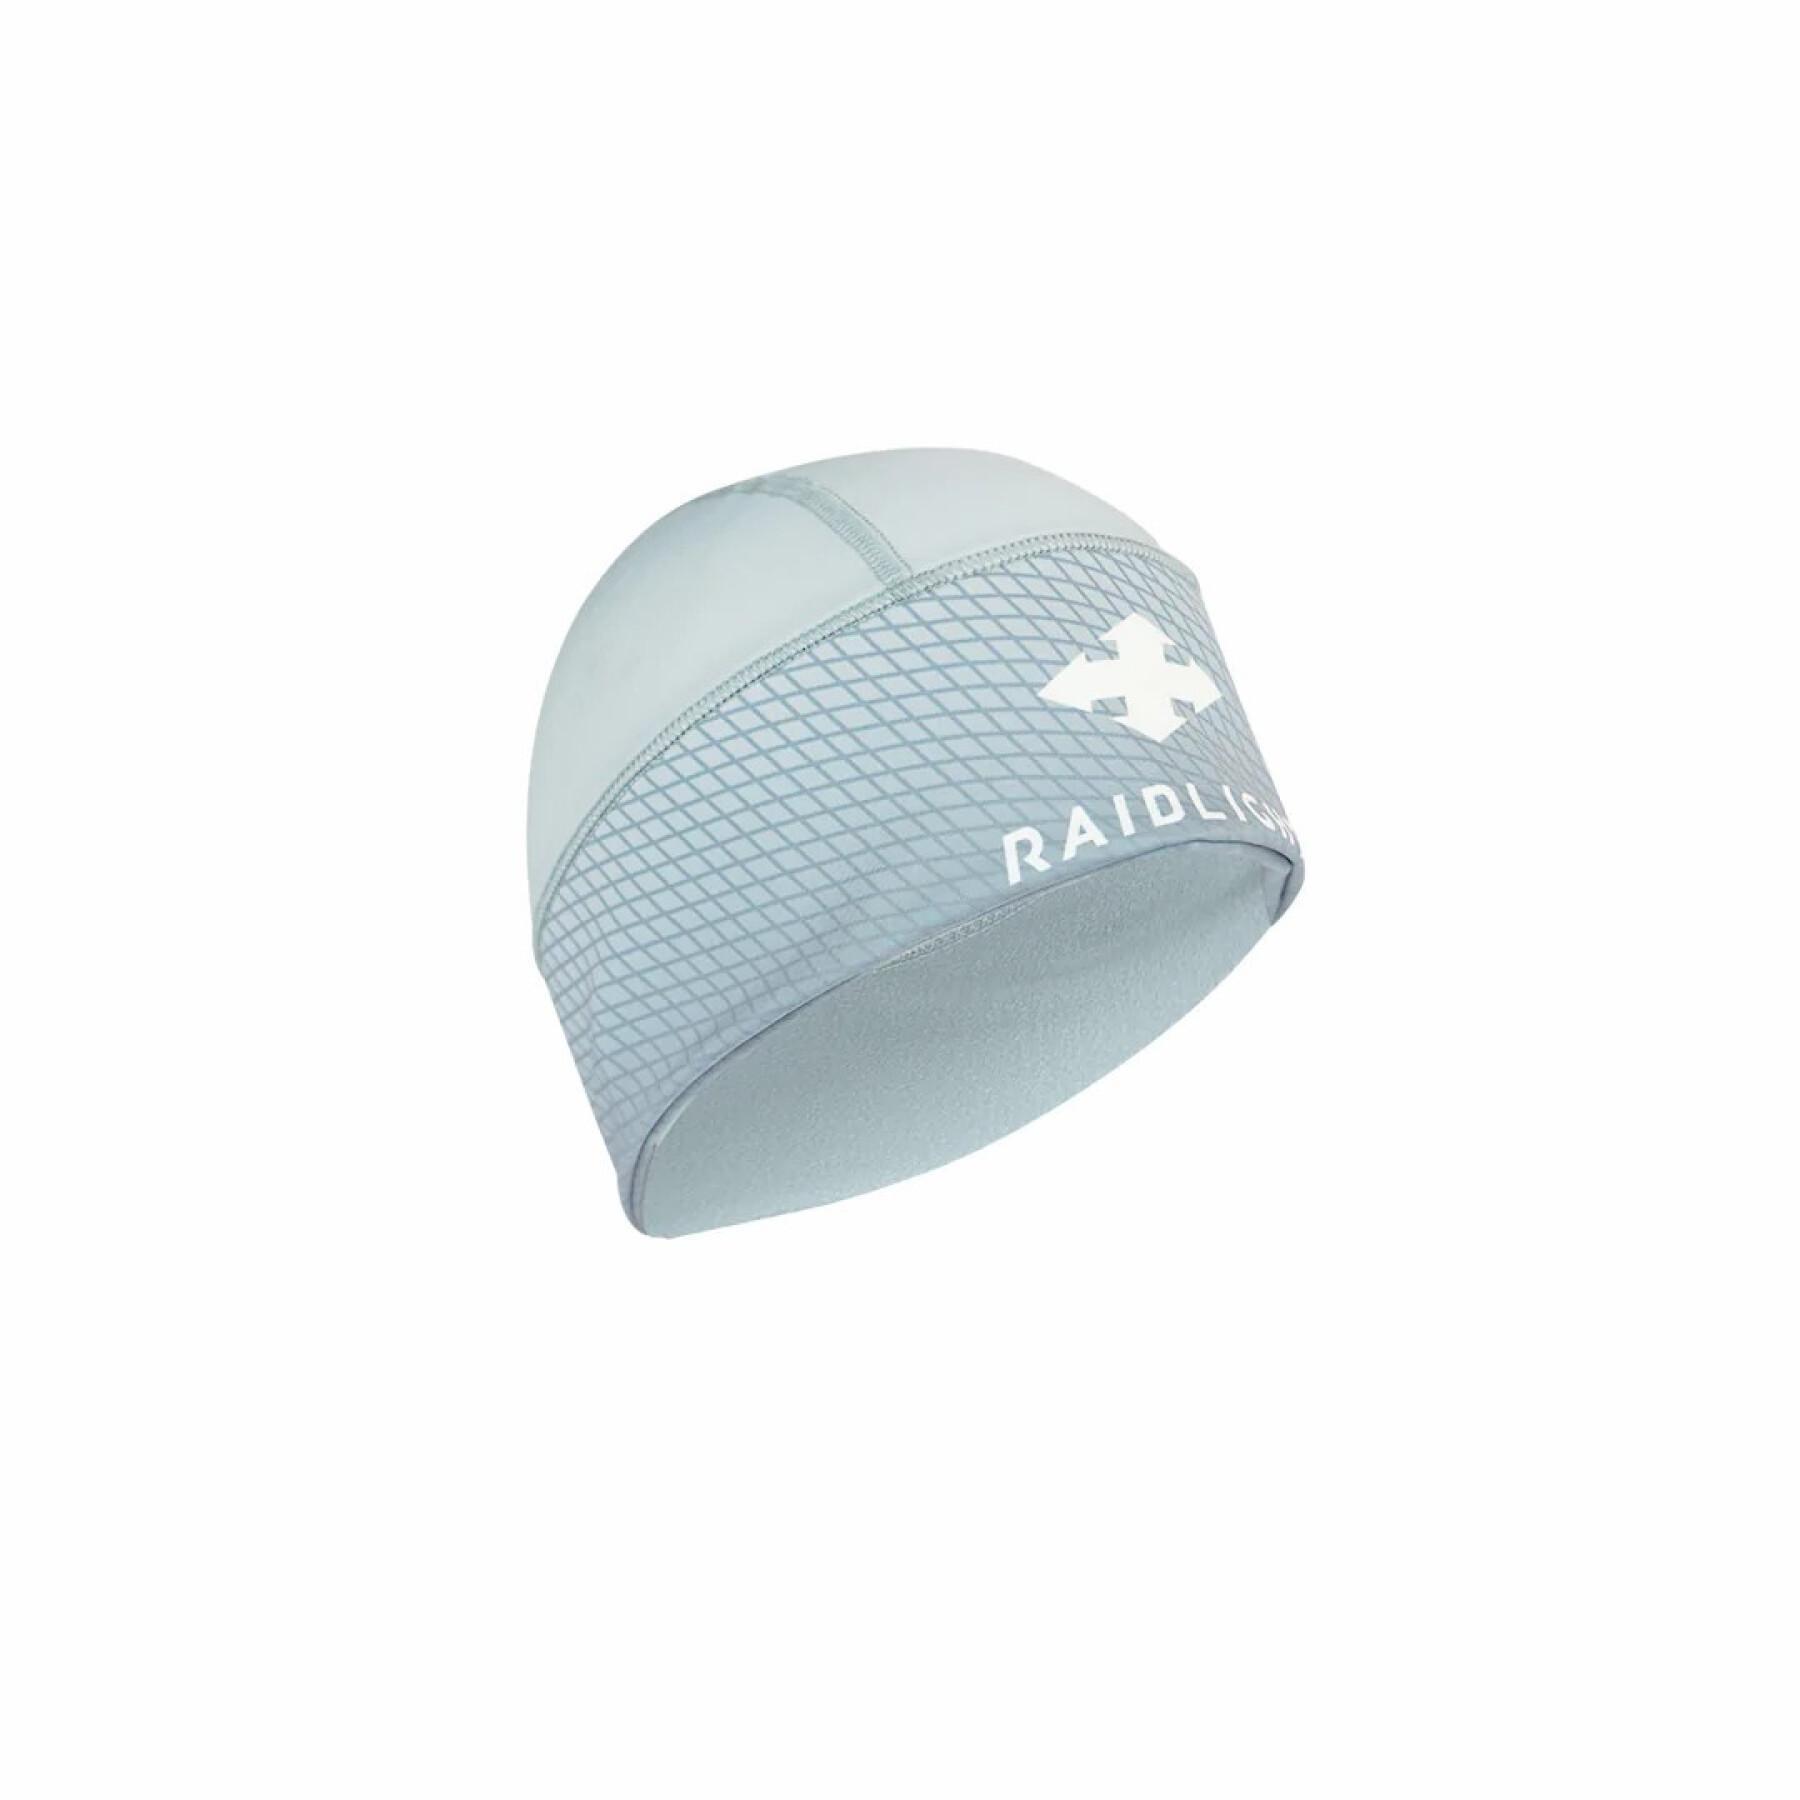 Damska czapka zimowa RaidLight Made in France